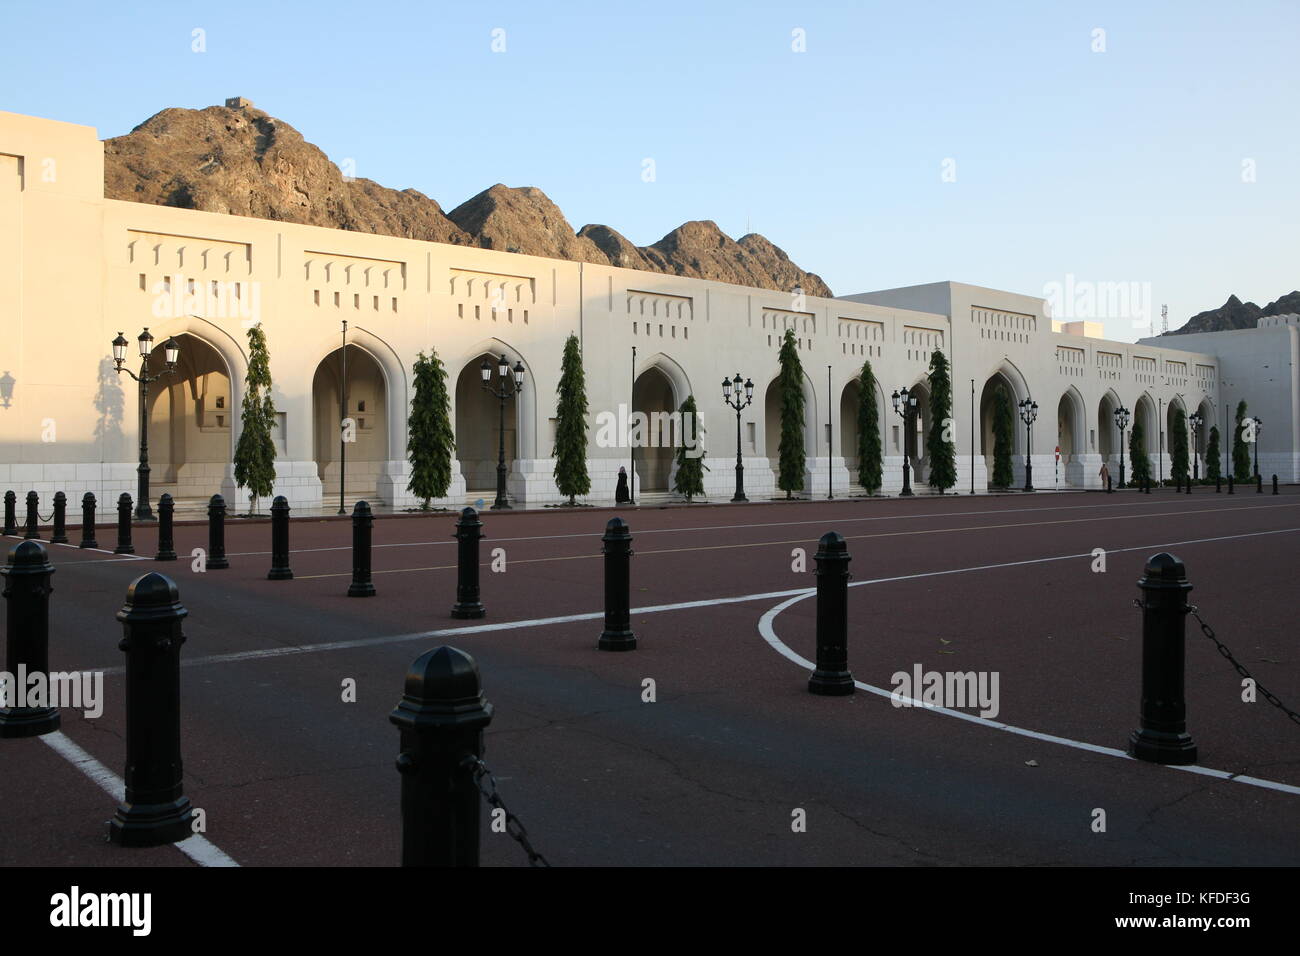 Al-Alam Palast in Alt-Maskat - Muscat Oman Fassade Entrance Stock Photo